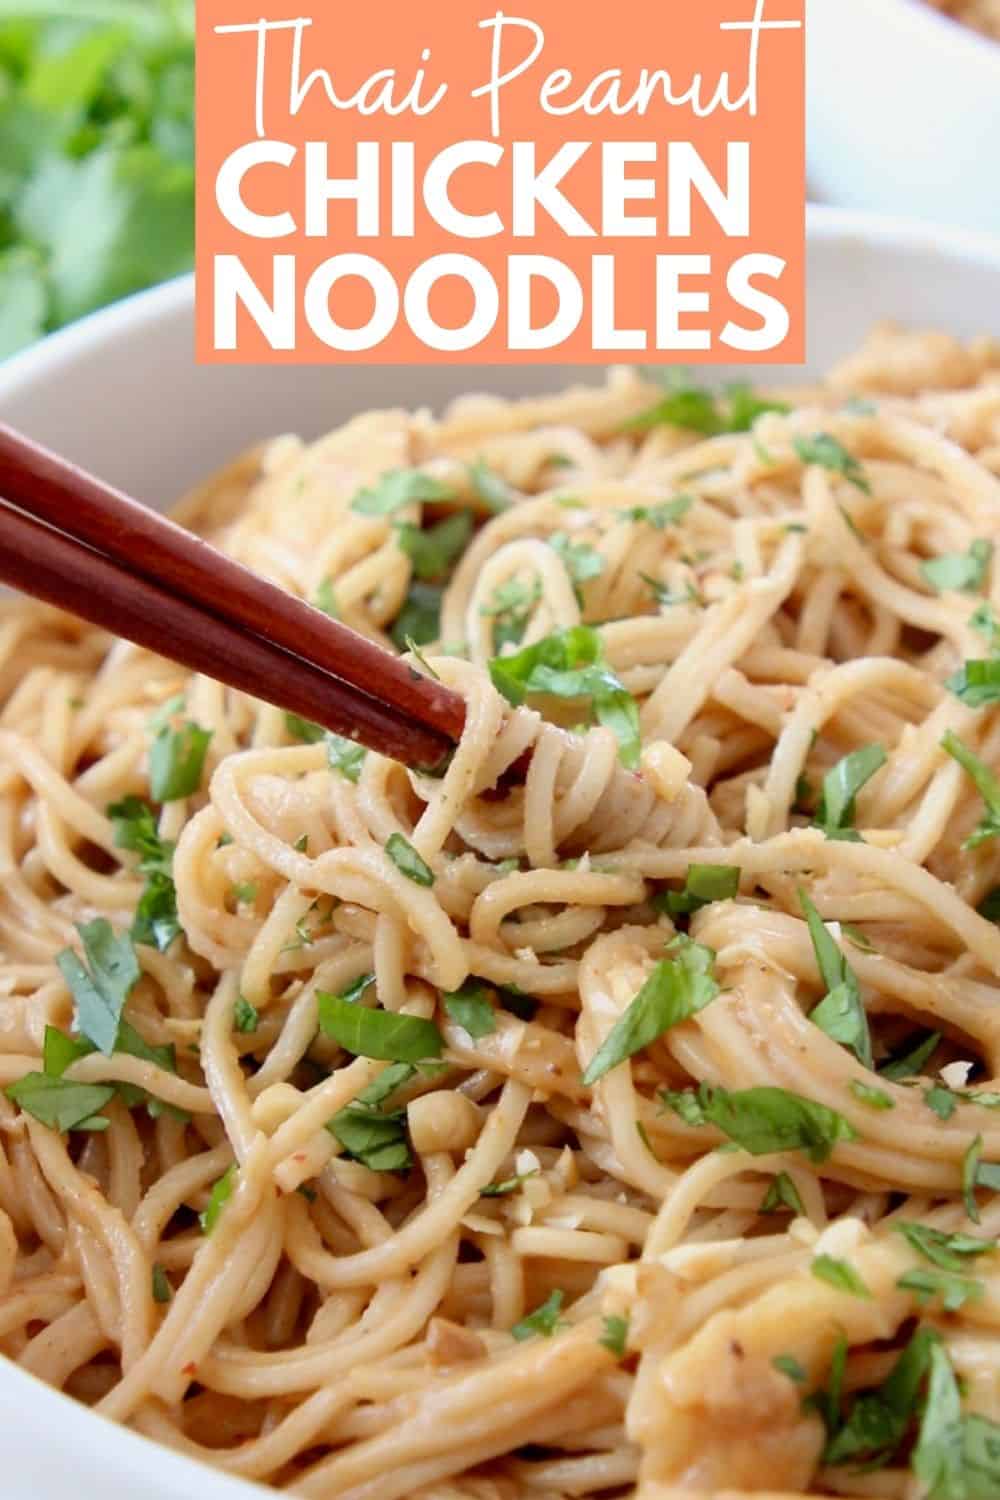 Thai Peanut Chicken Noodles Recipe - WhitneyBond.com